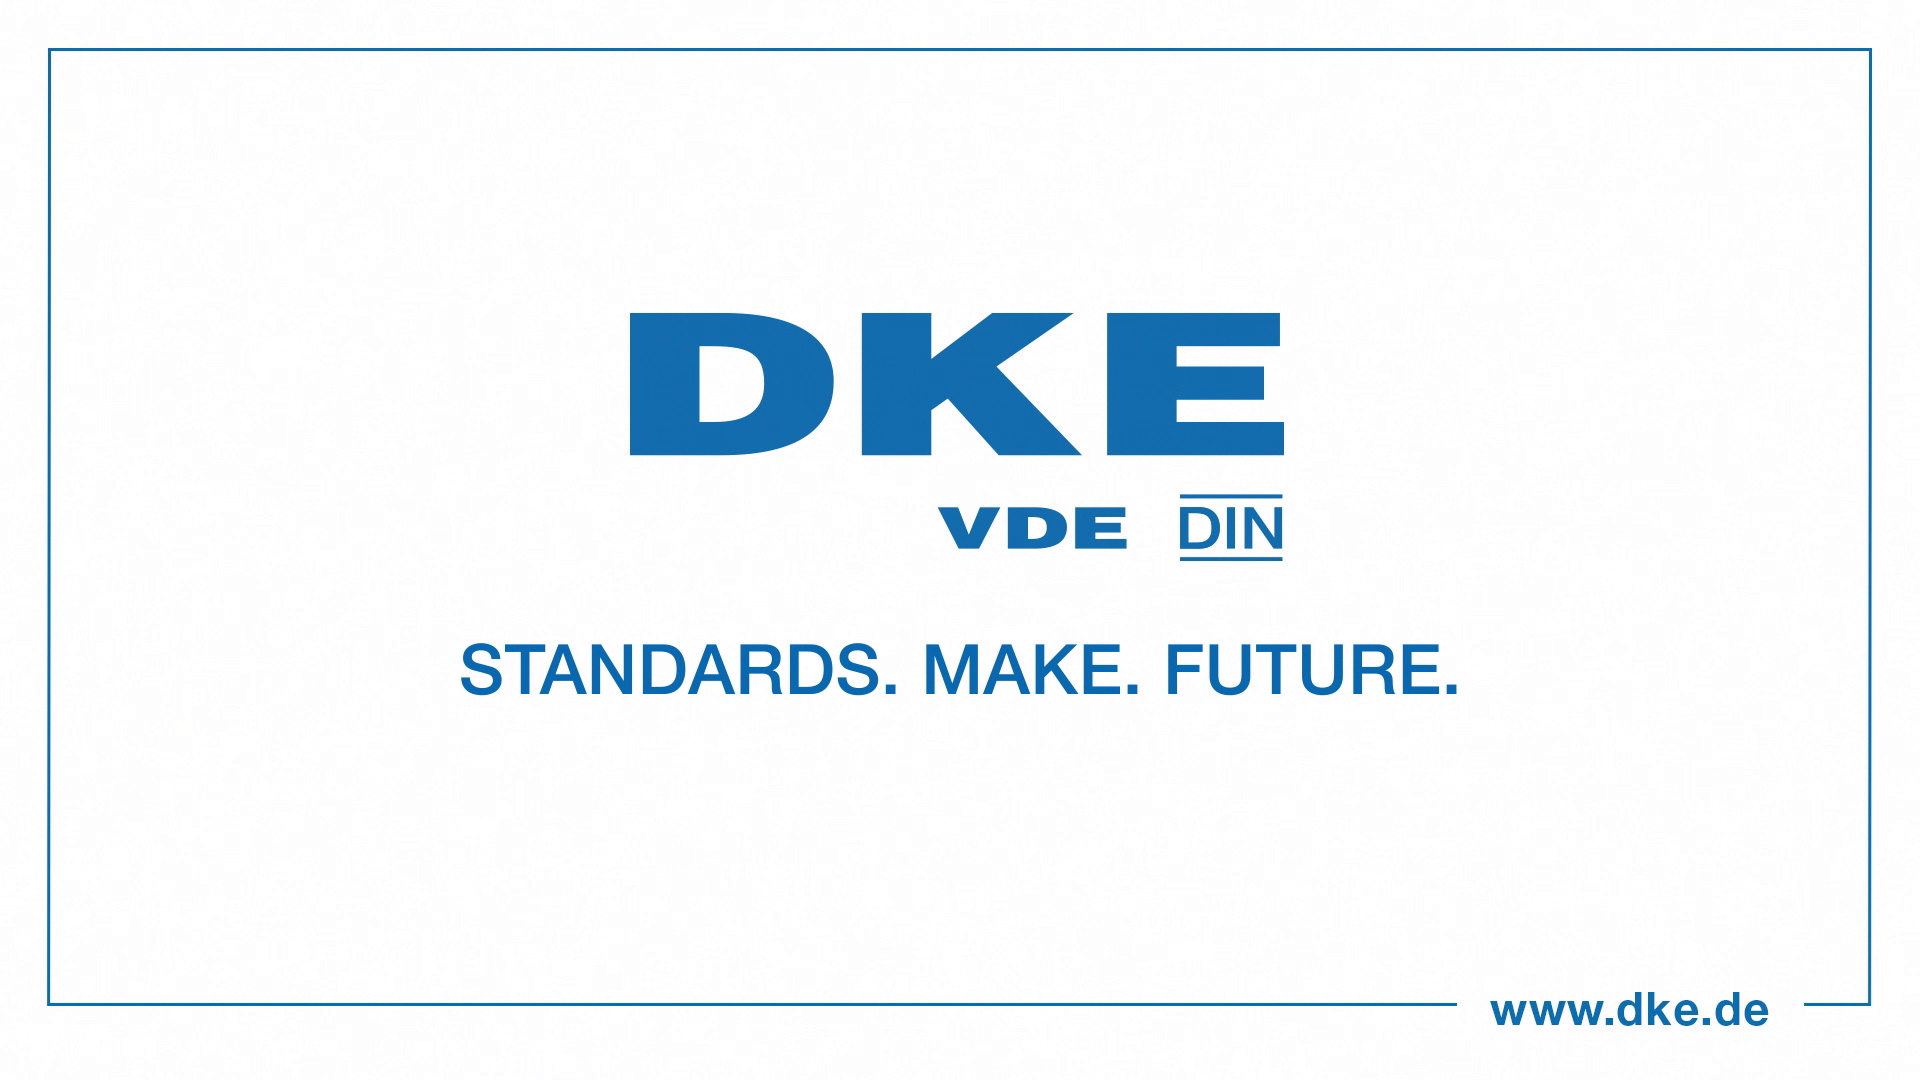 DKE – STANDARDS. MAKE. FUTURE.